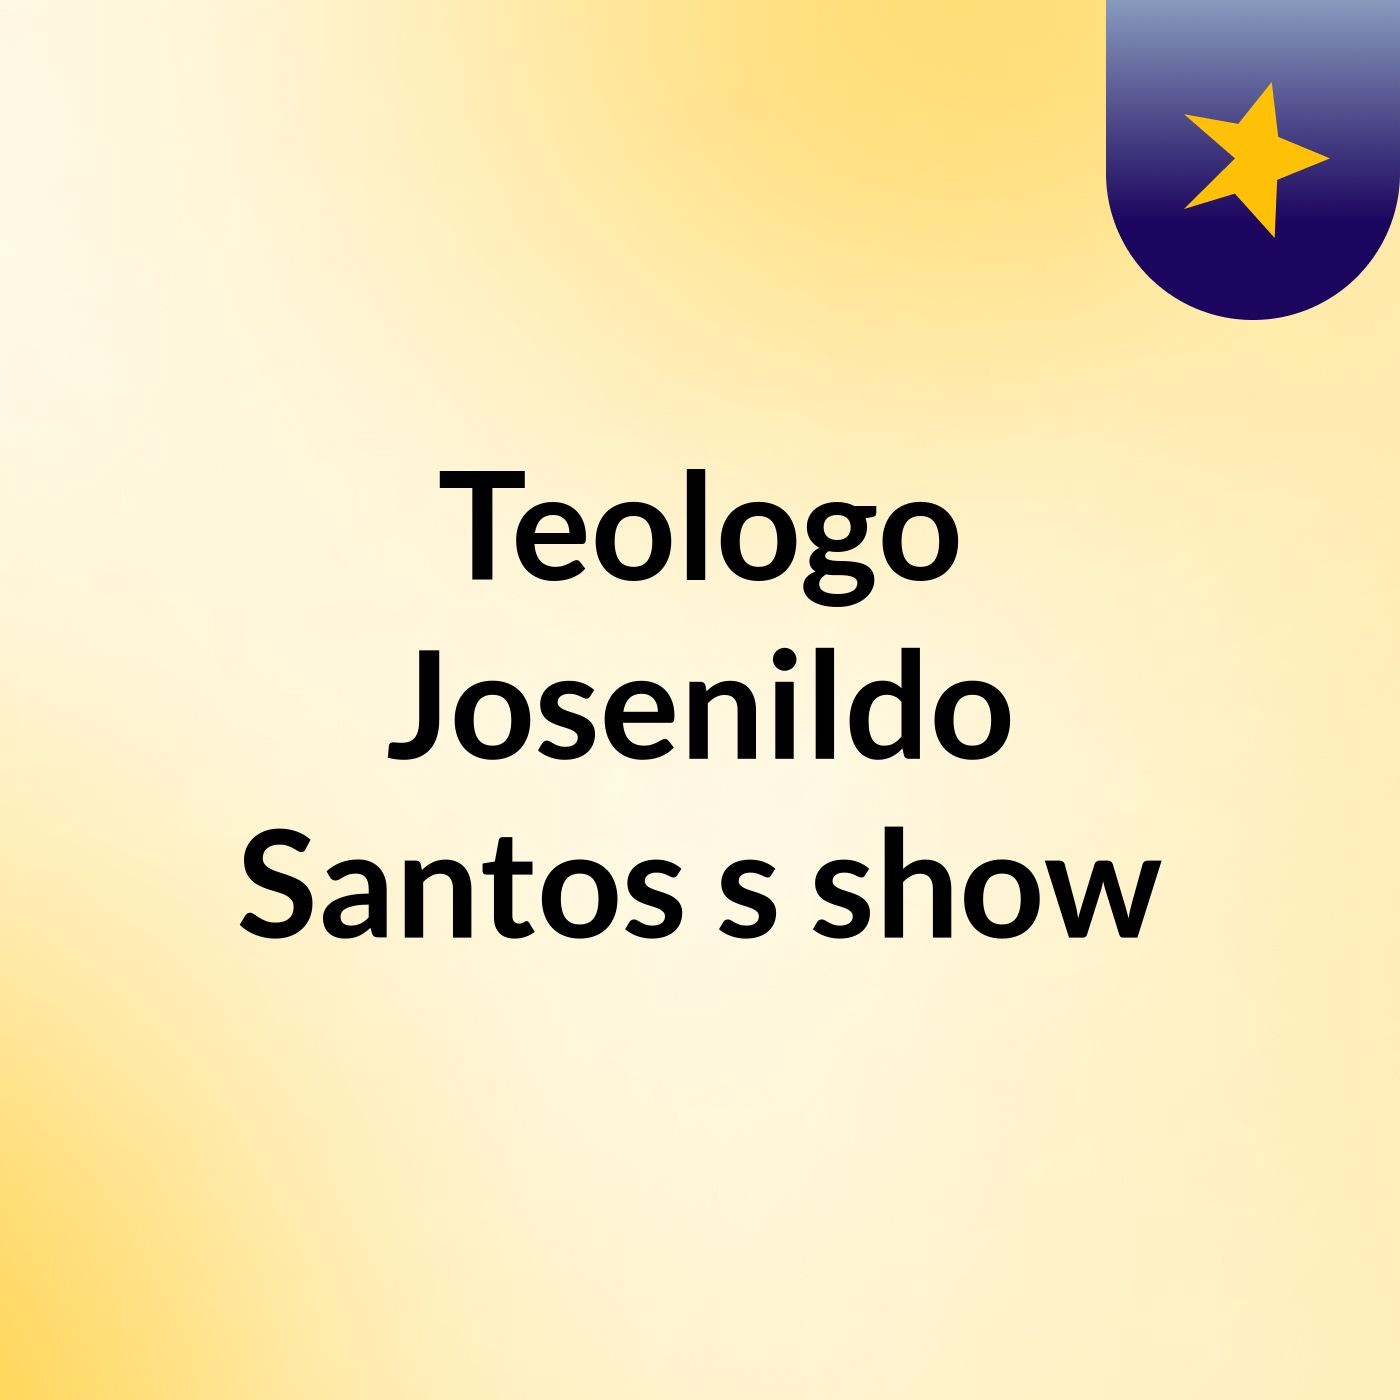 Teologo Josenildo Santos's show